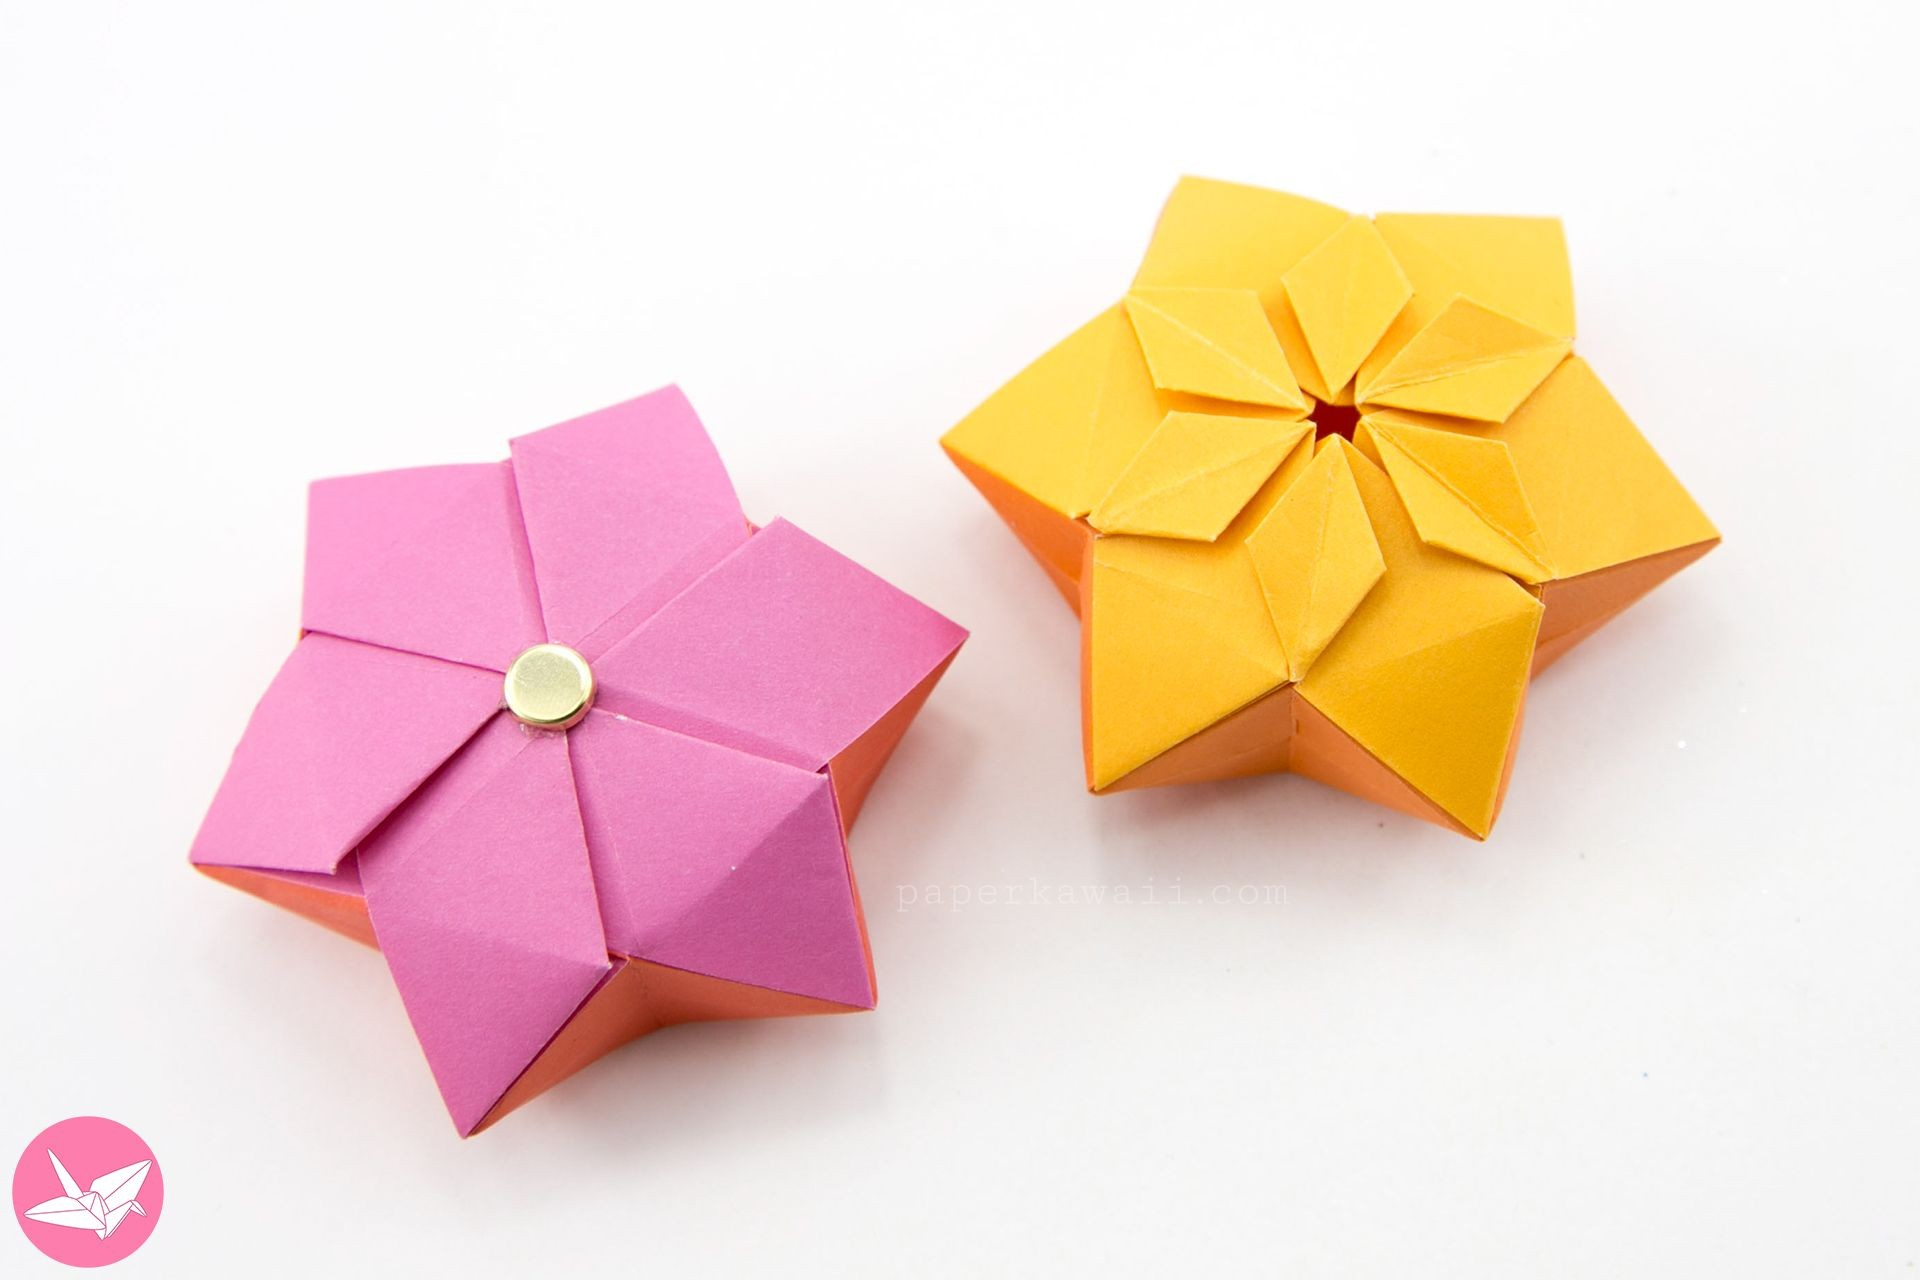 Origami Flower Star Papercraft Origami Flowers Origami Hexagonal Puffy Star Tutorial